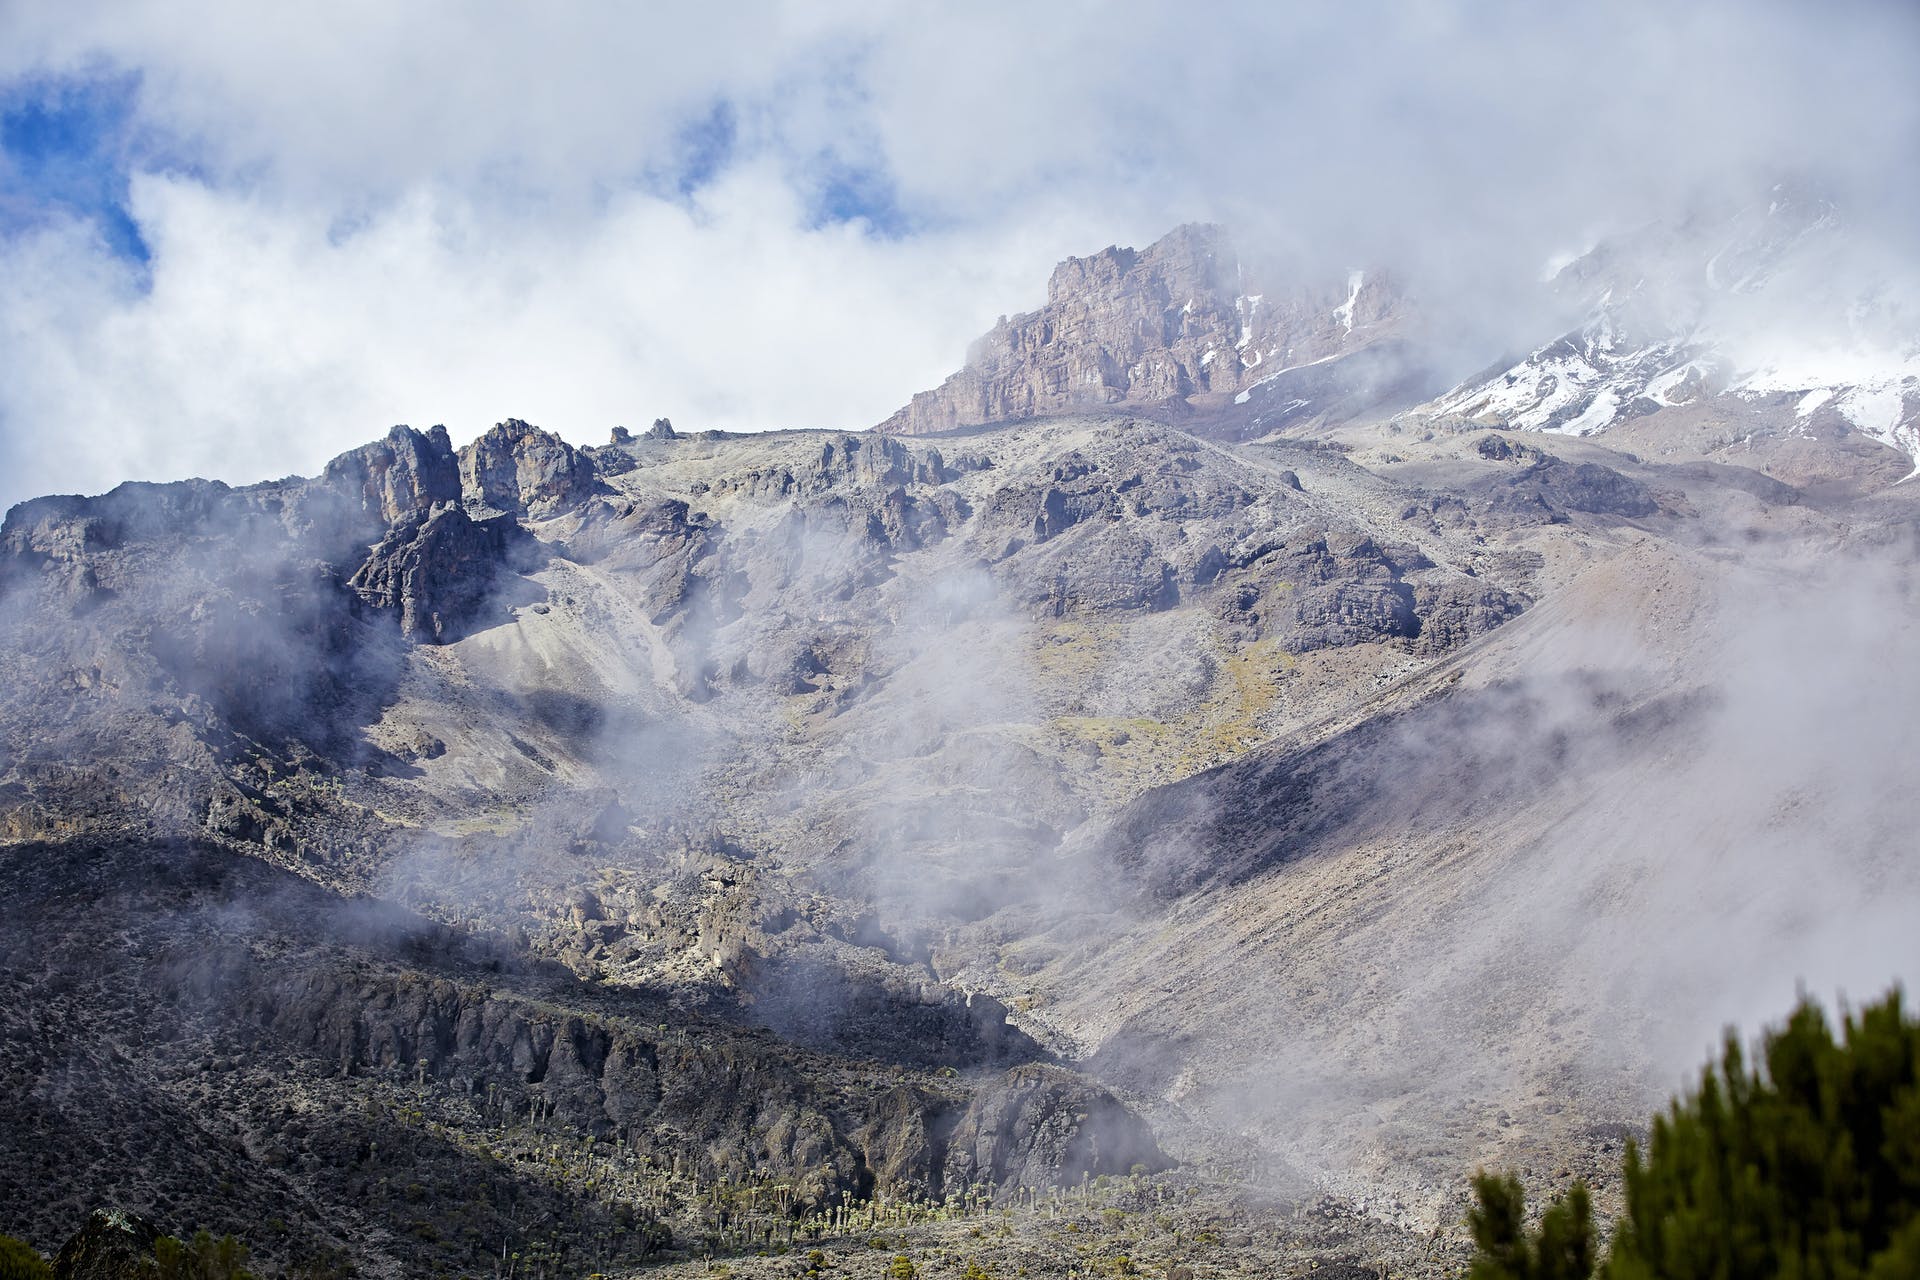 The summit of majestic Mount Kilimanjaro, shrouded in cloud.